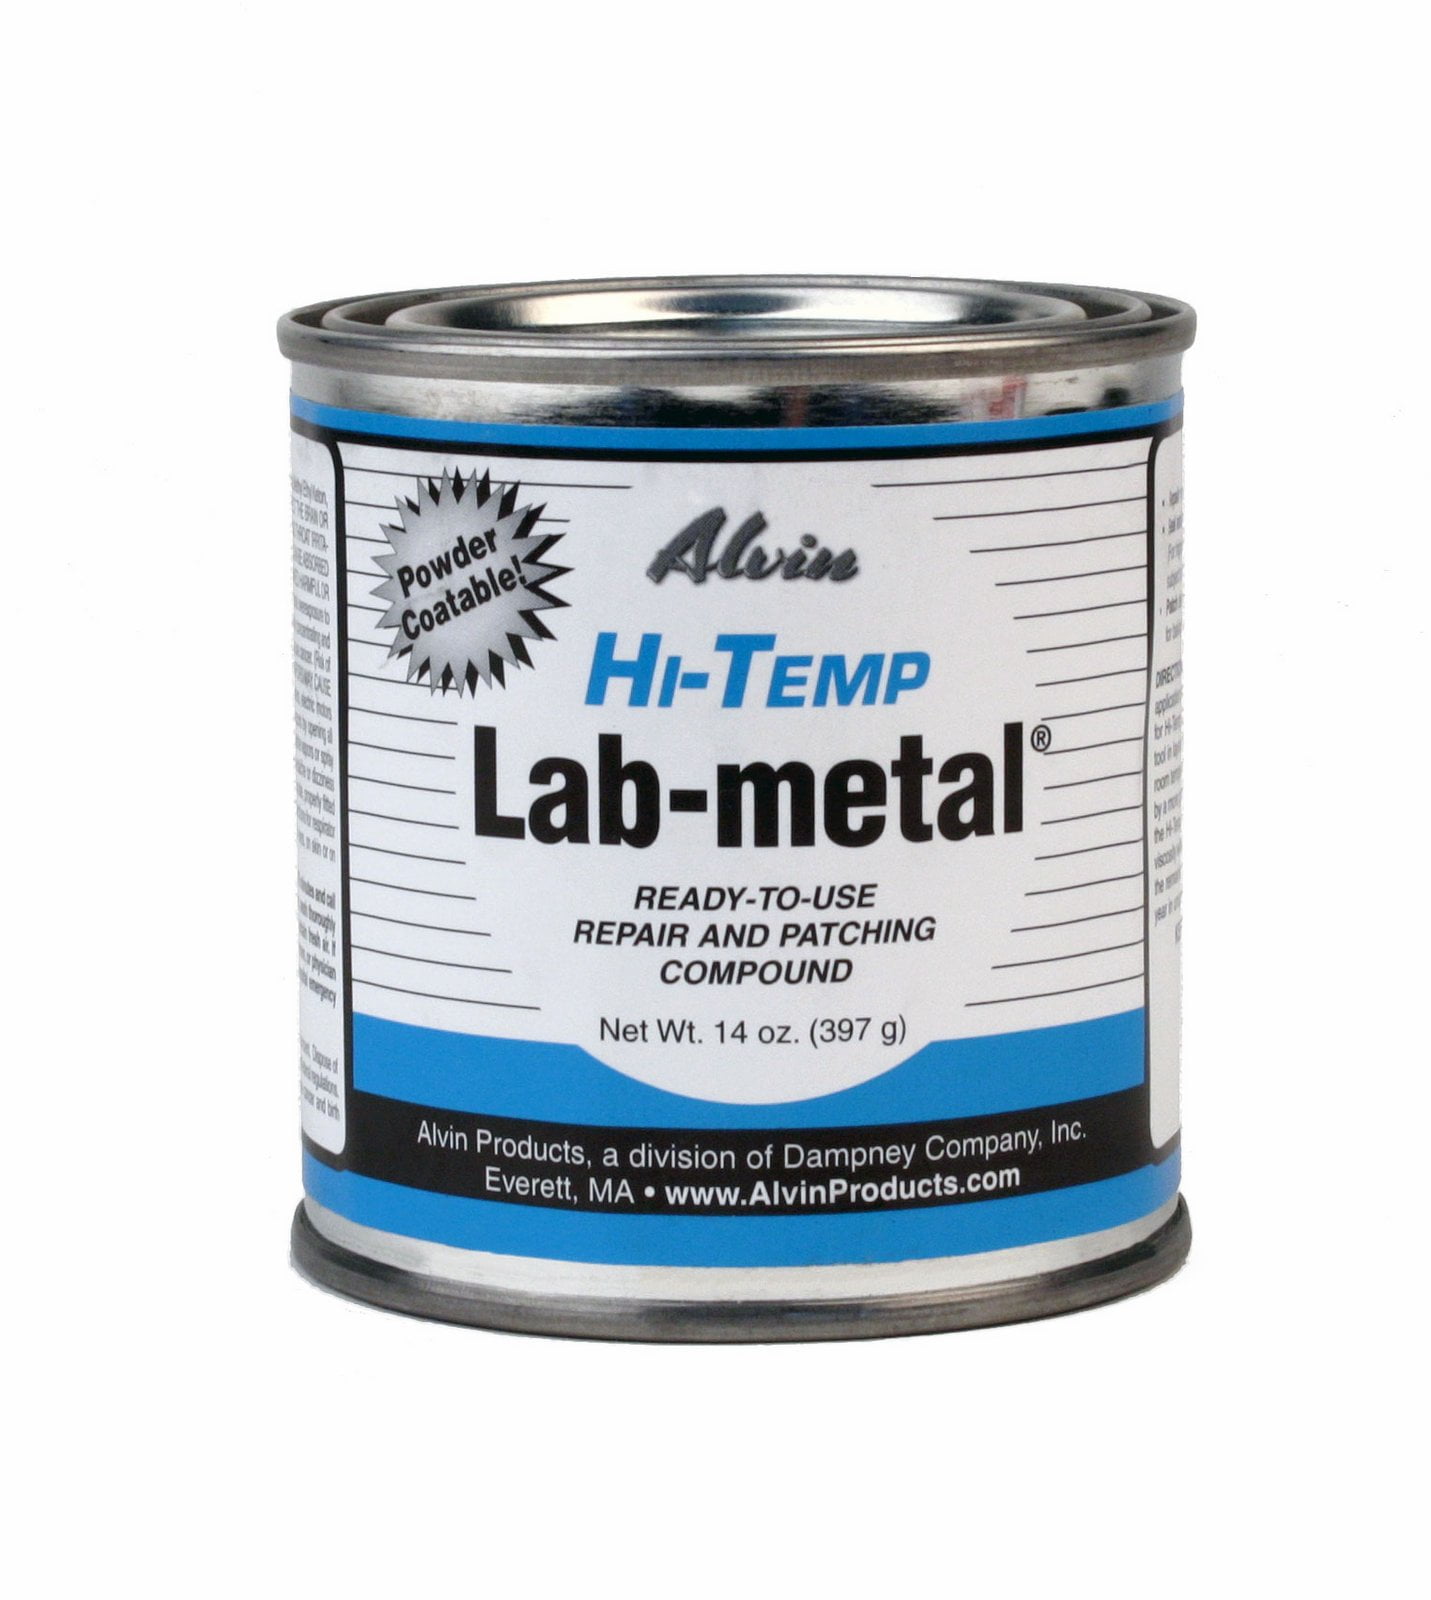 J-B Weld 3 oz. ExtremeHeat Temperature-Resistant Metallic Paste at